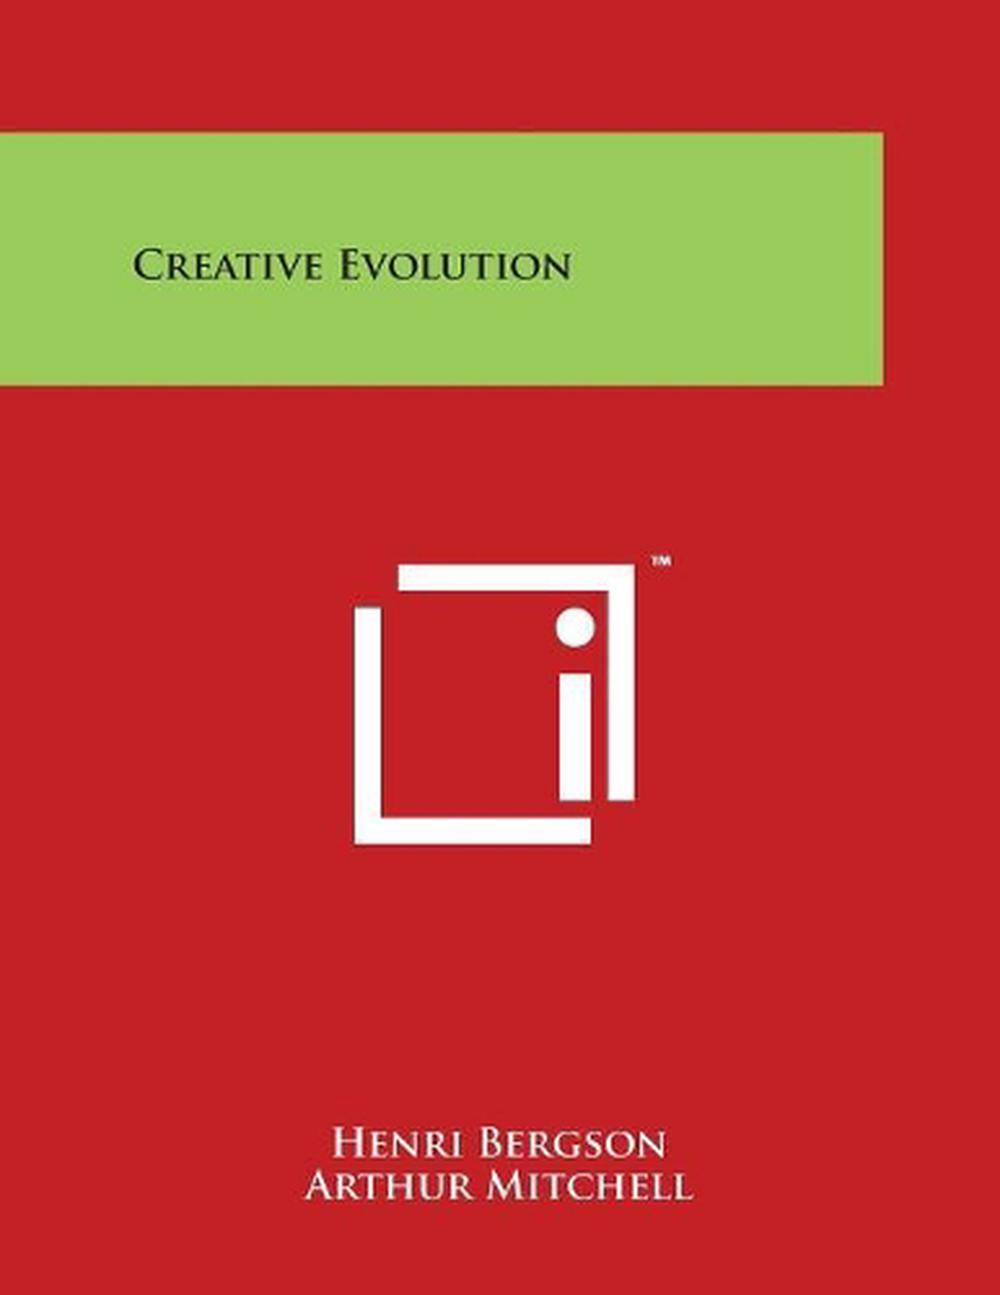 creative evolution by henri bergson